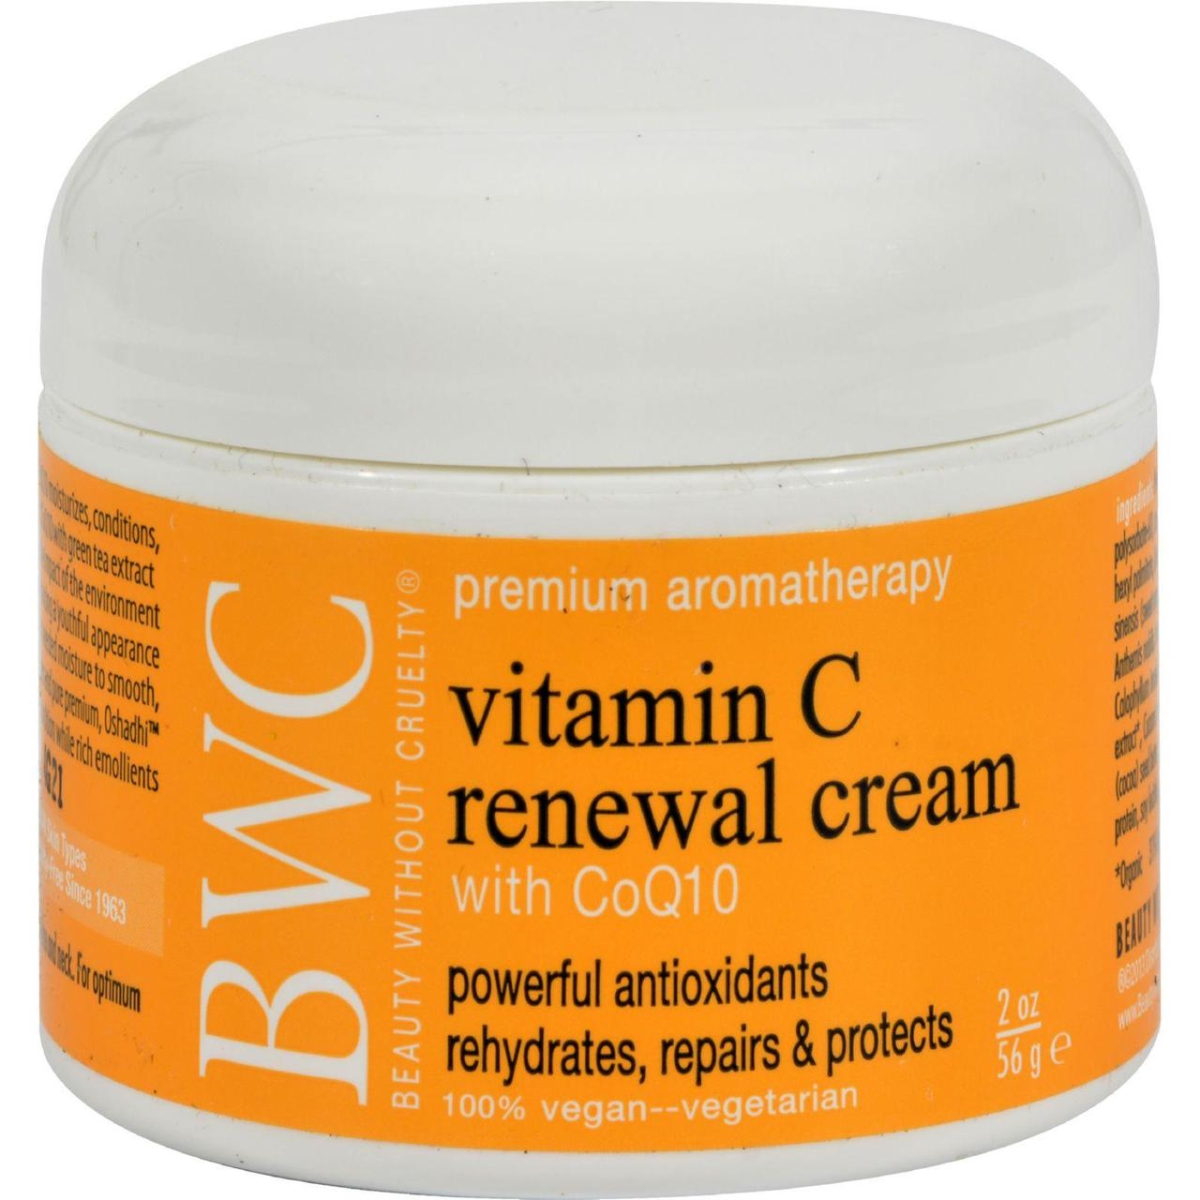 Hg0590992 2 Oz Renewal Cream Vitamin C With Coq10